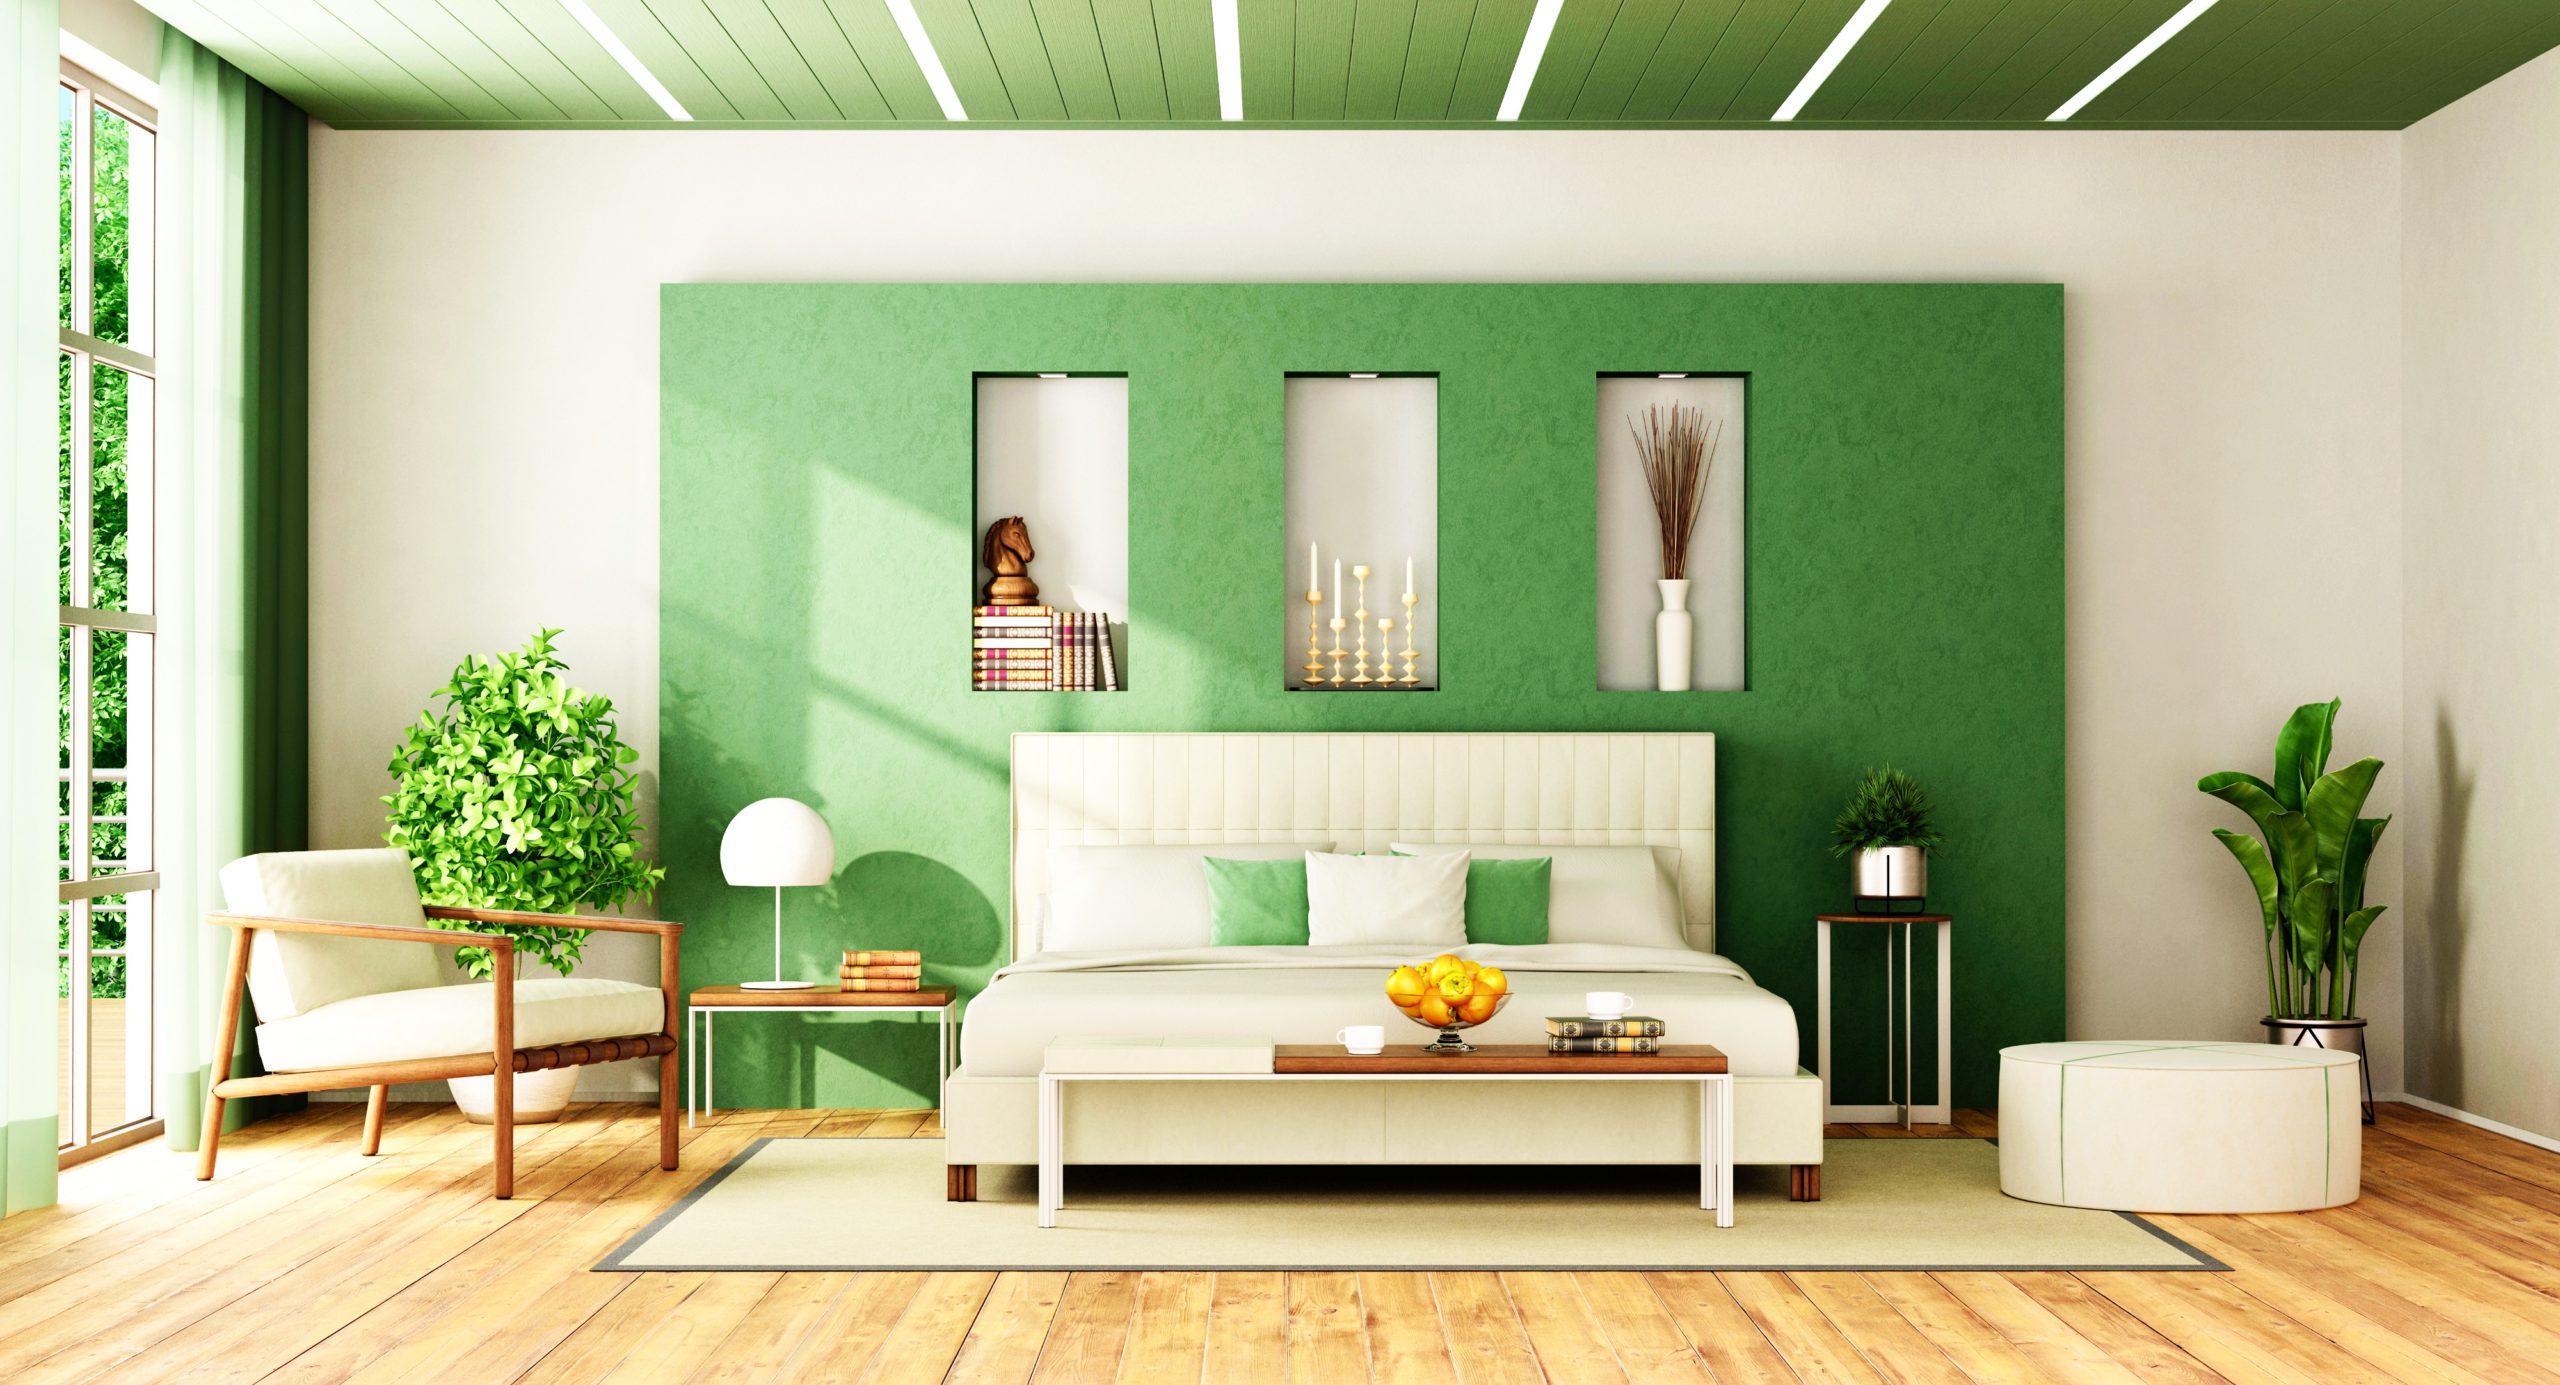 <img src="green.jpg" alt="green bedroom with cool ceiling lights"/> 